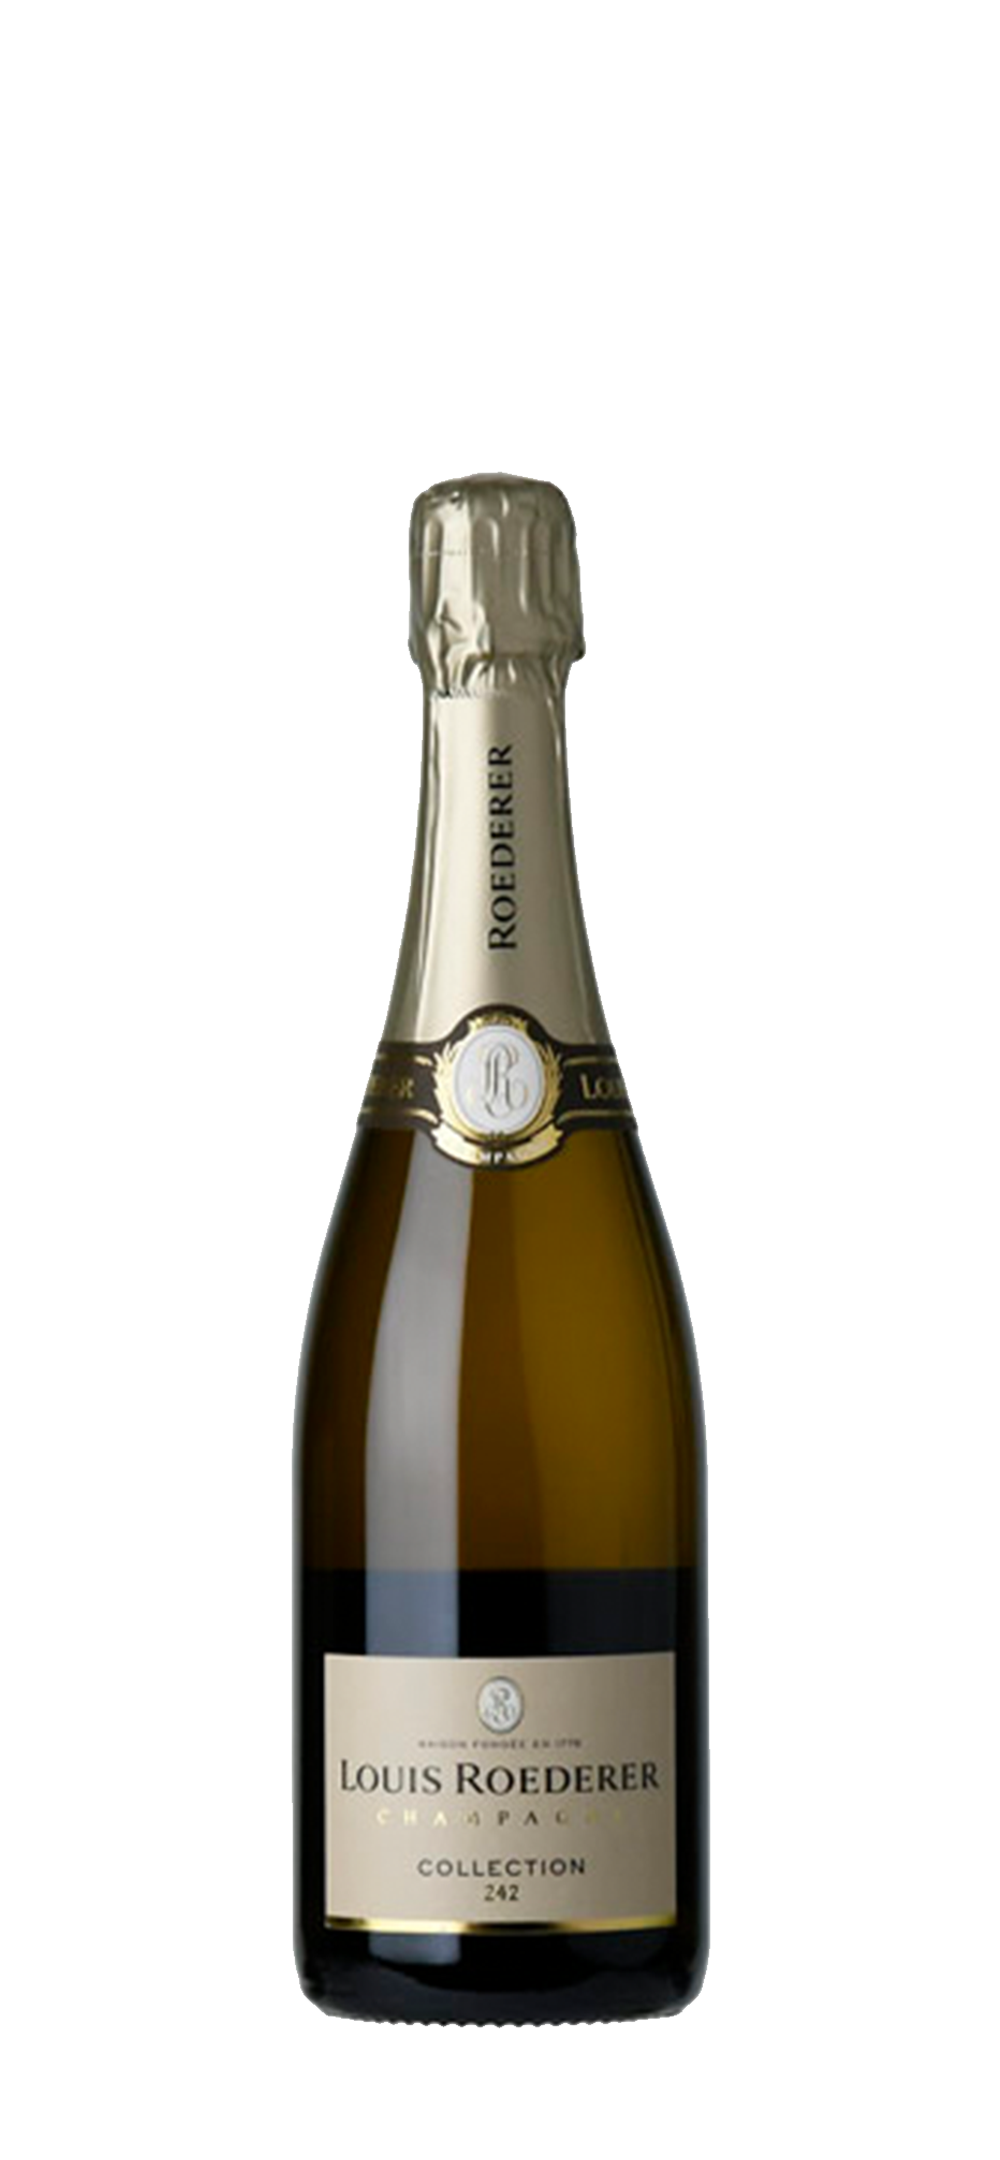 LOUIS ROEDERER Champagne Brut Premier Collection 244